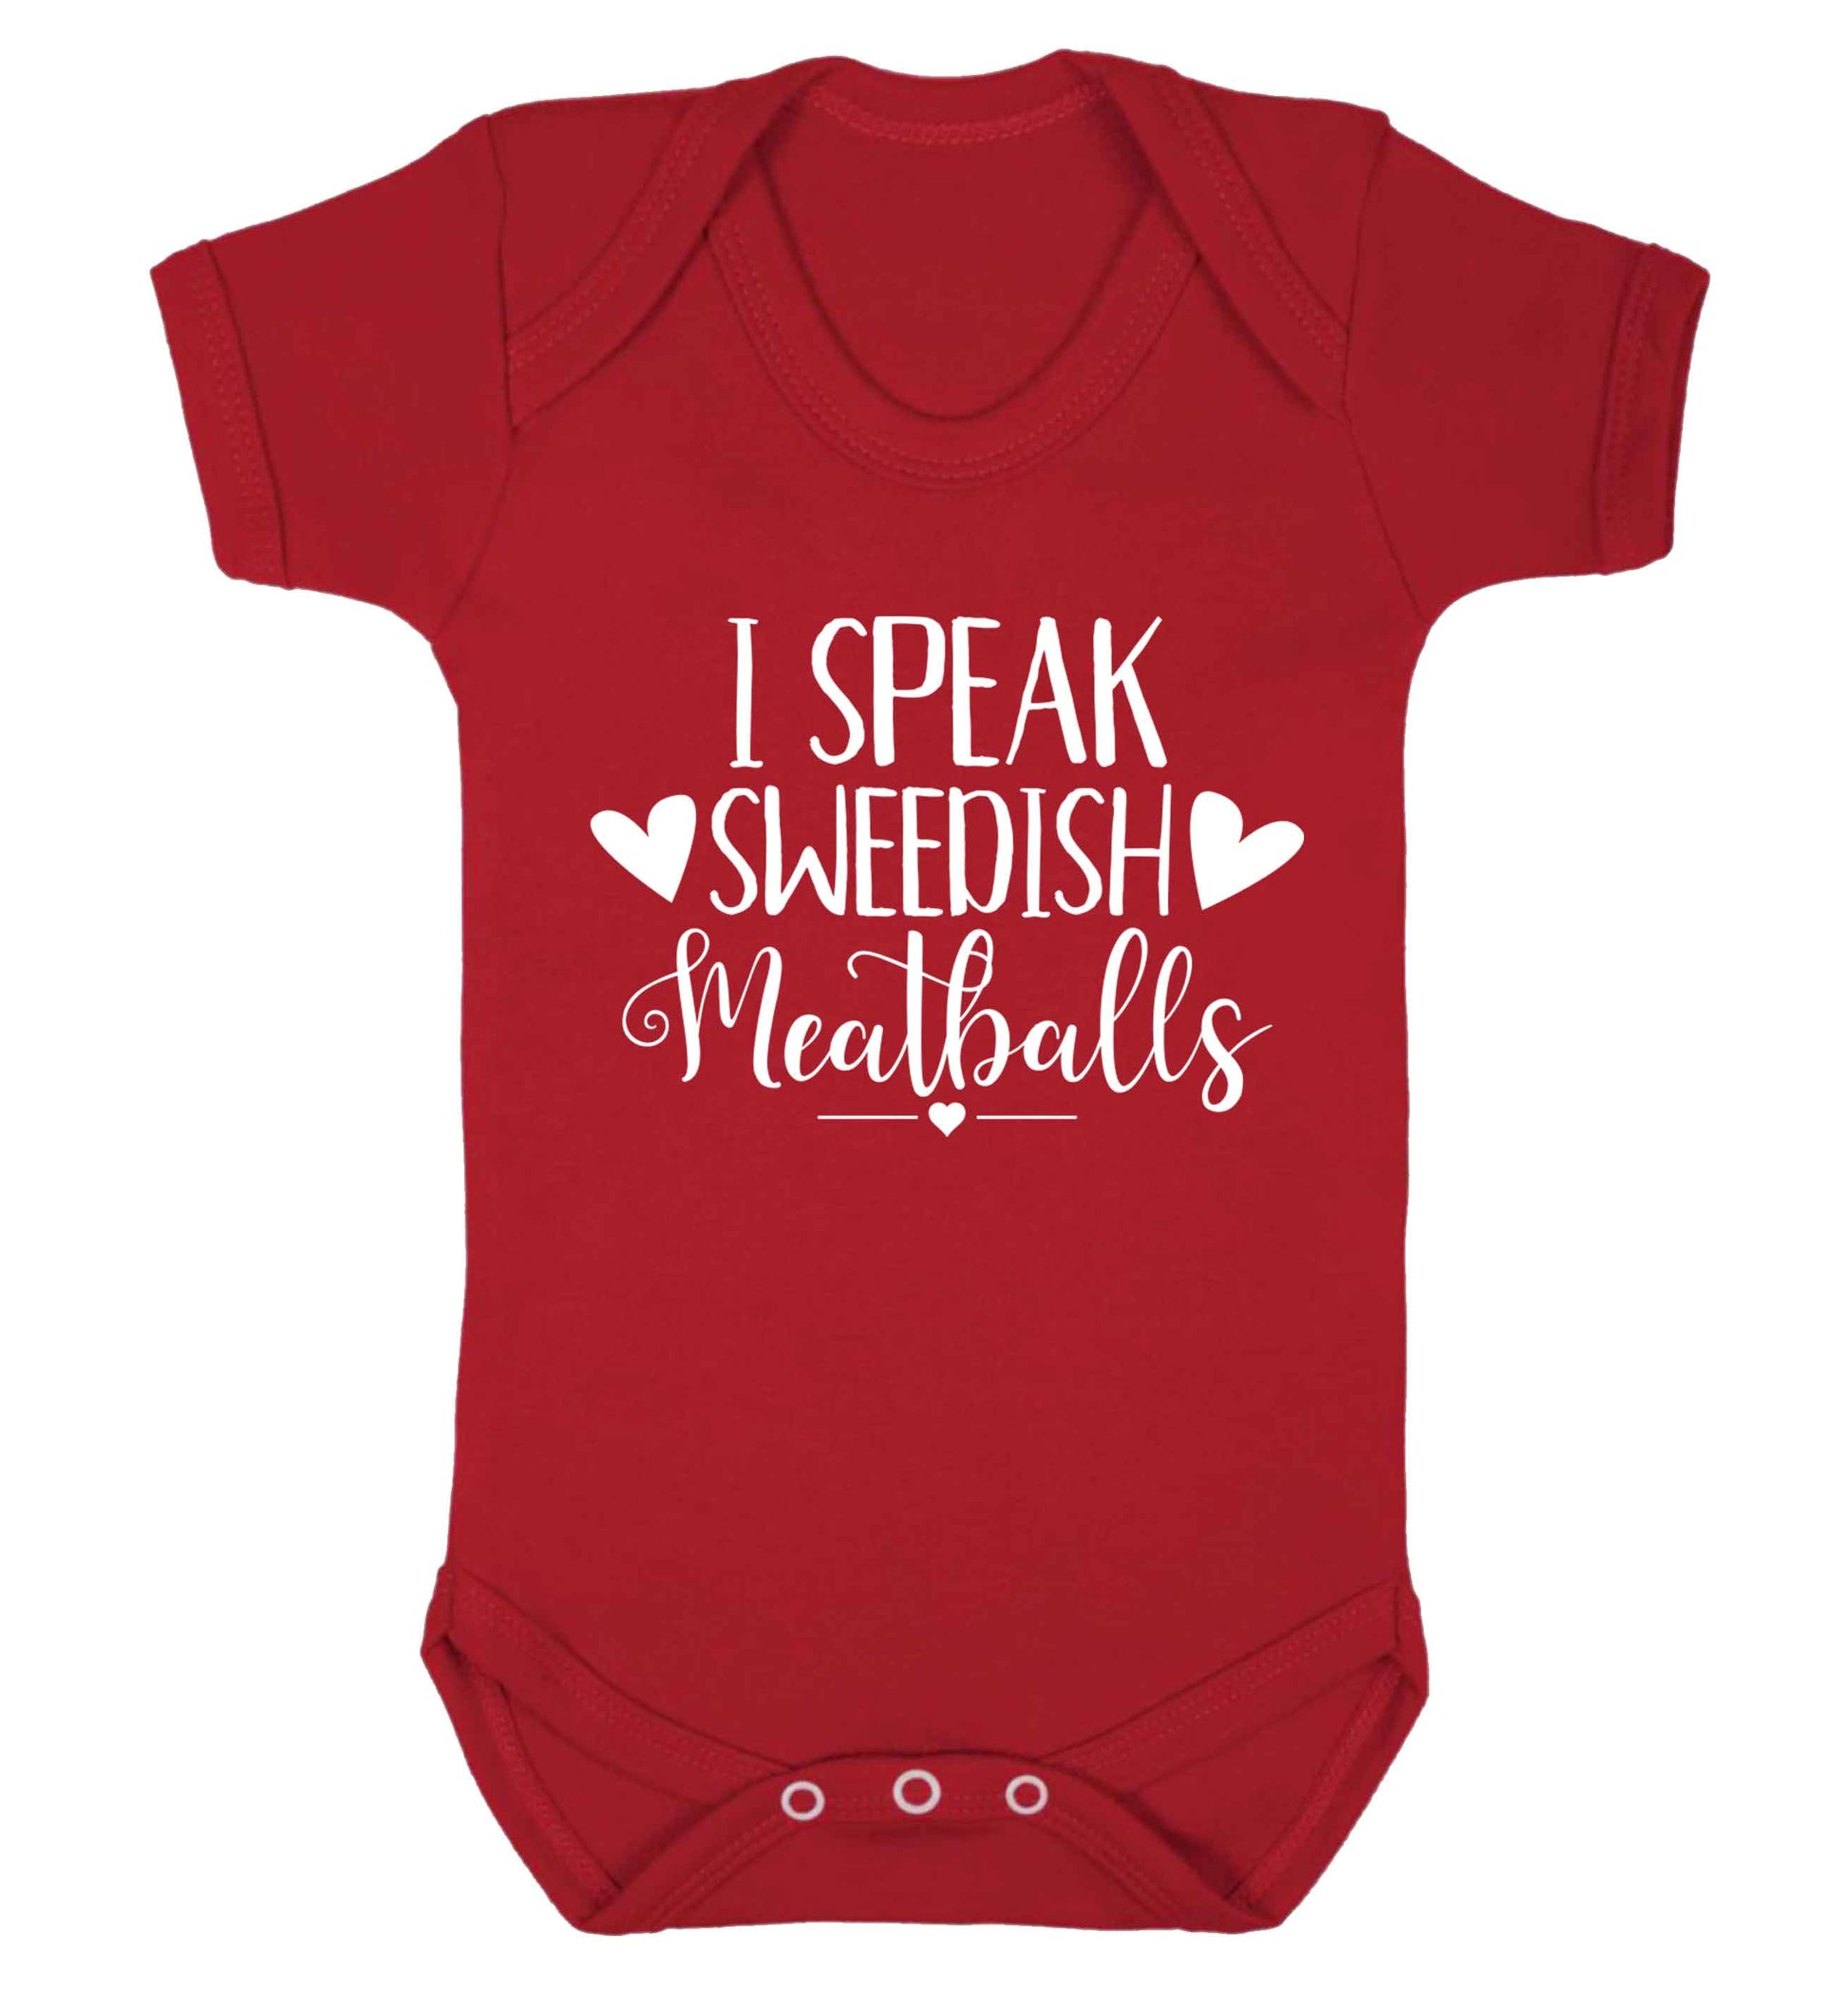 I speak sweedish...meatballs Baby Vest red 18-24 months